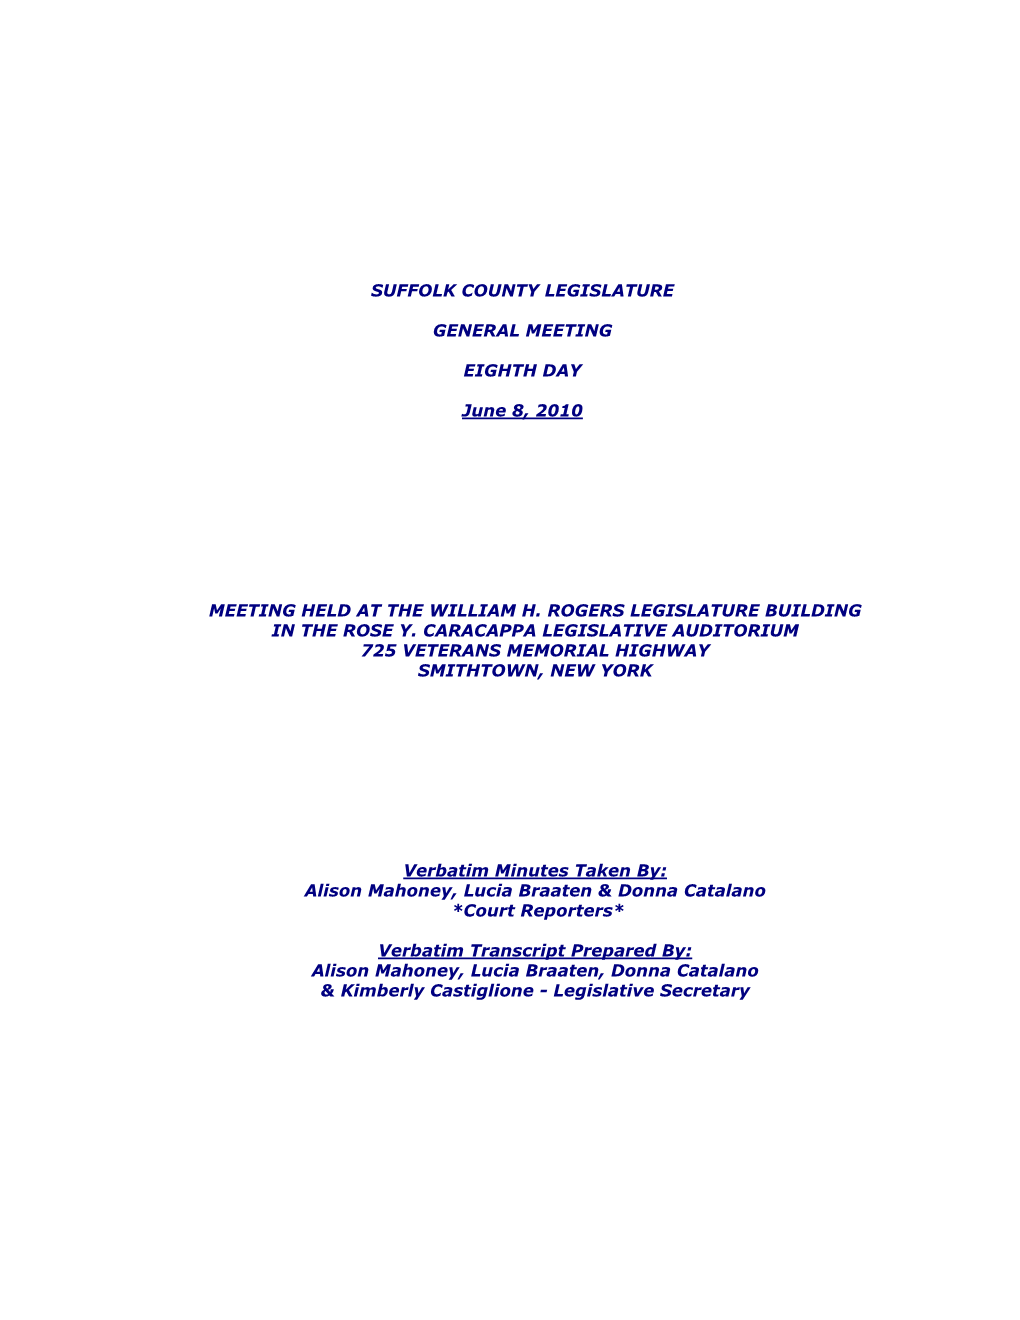 06/08/2010 General Meeting Minutes (PDF)